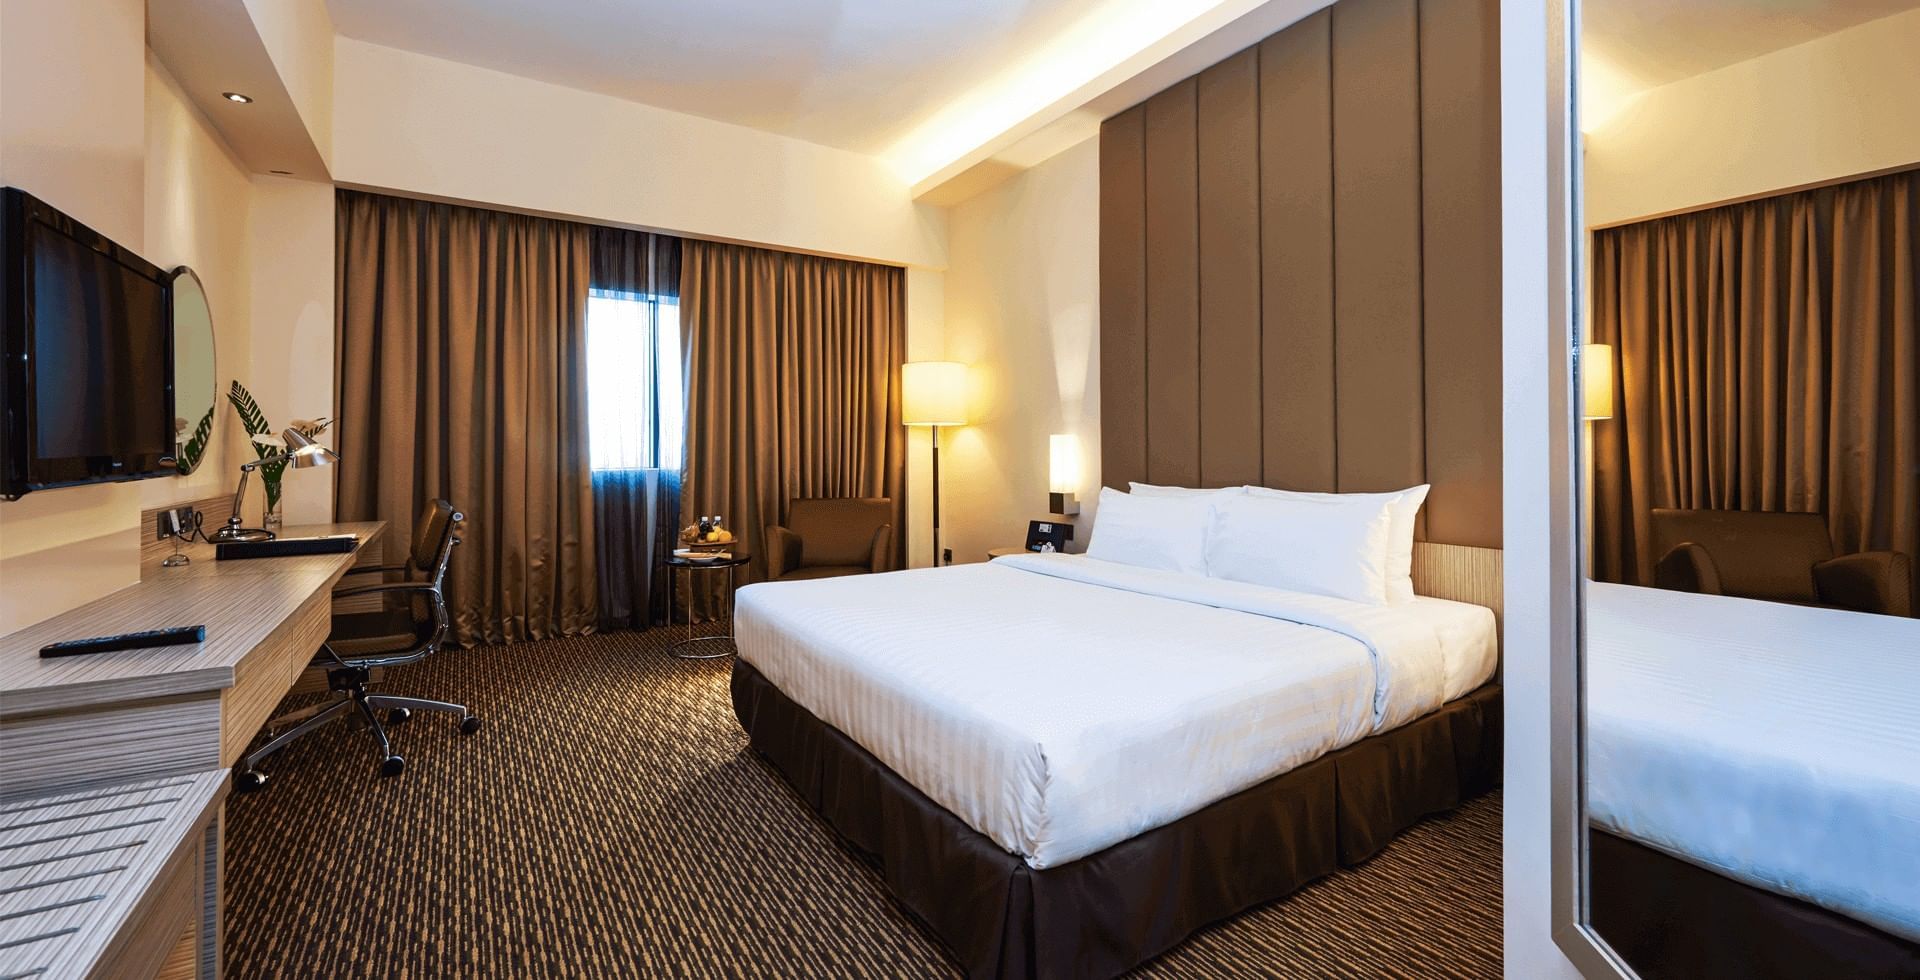 Club King Room in Sunway Hotel Seberang Jaya